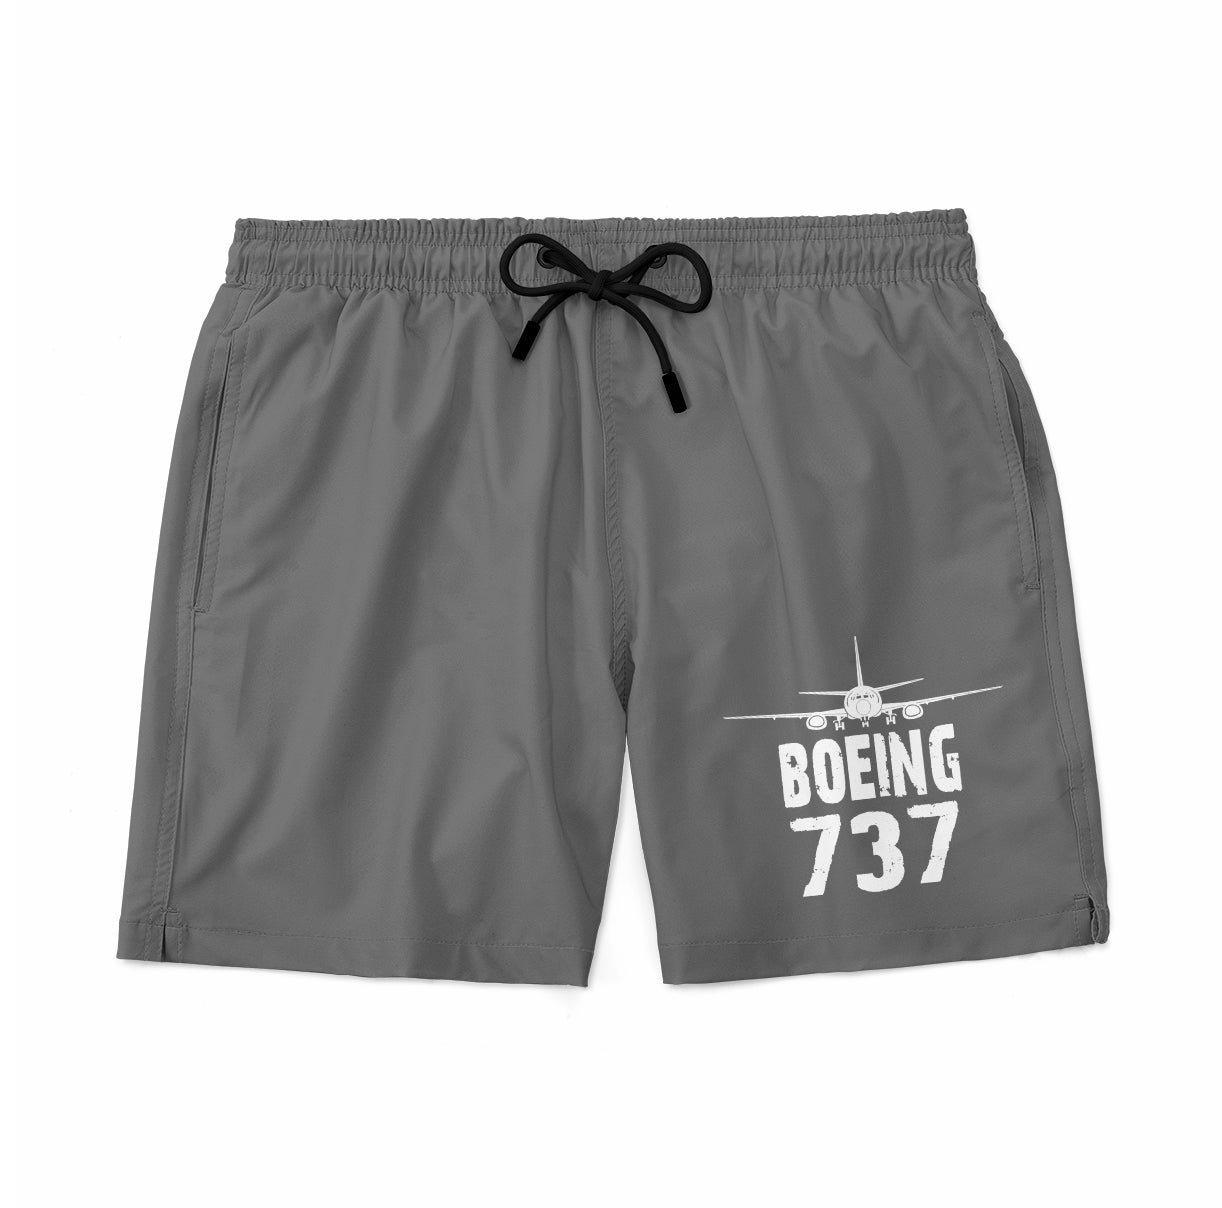 Boeing 737 & Plane Designed Swim Trunks & Shorts